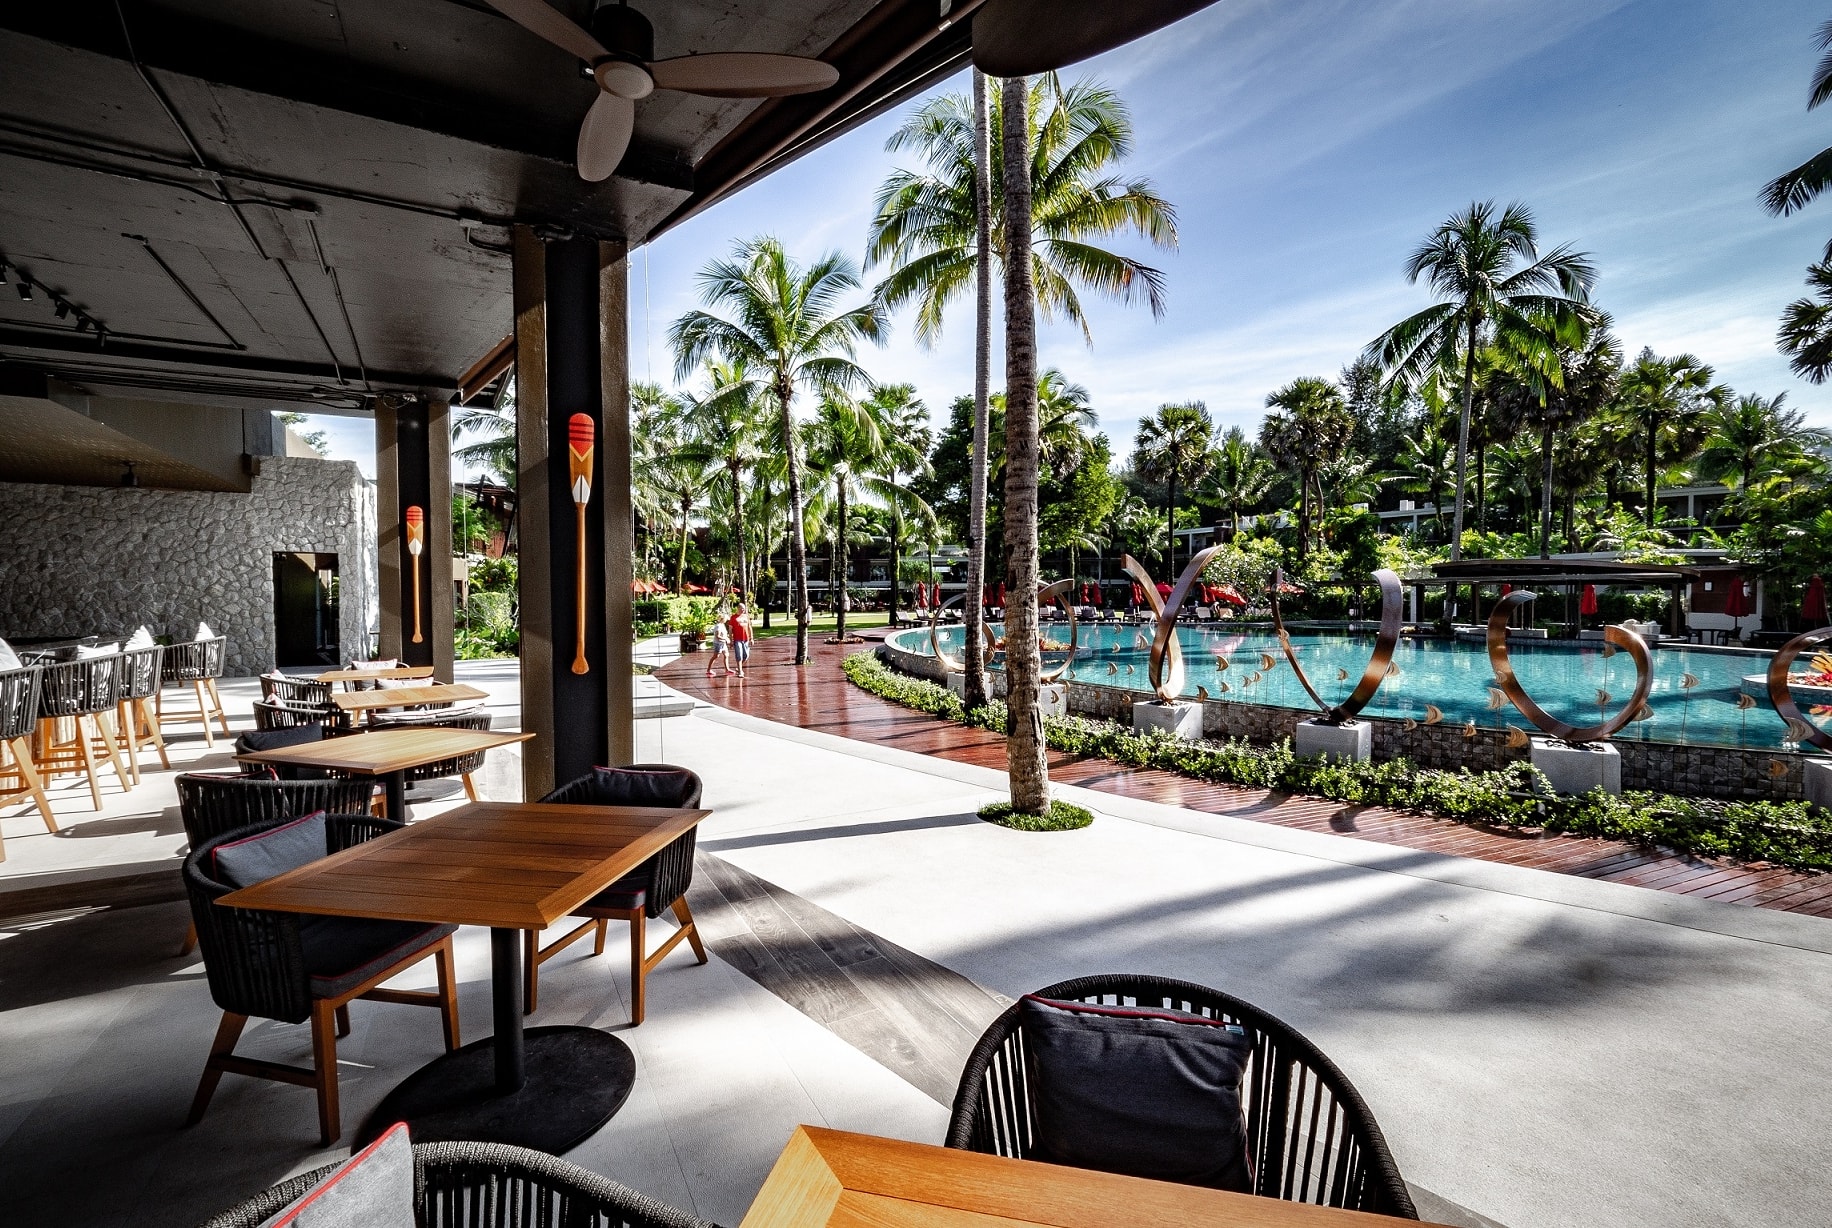 Al aire libre Maligno Larry Belmont Ramada Resort by Wyndham Khao Lak | Phang Nga Hotels, TH 82190